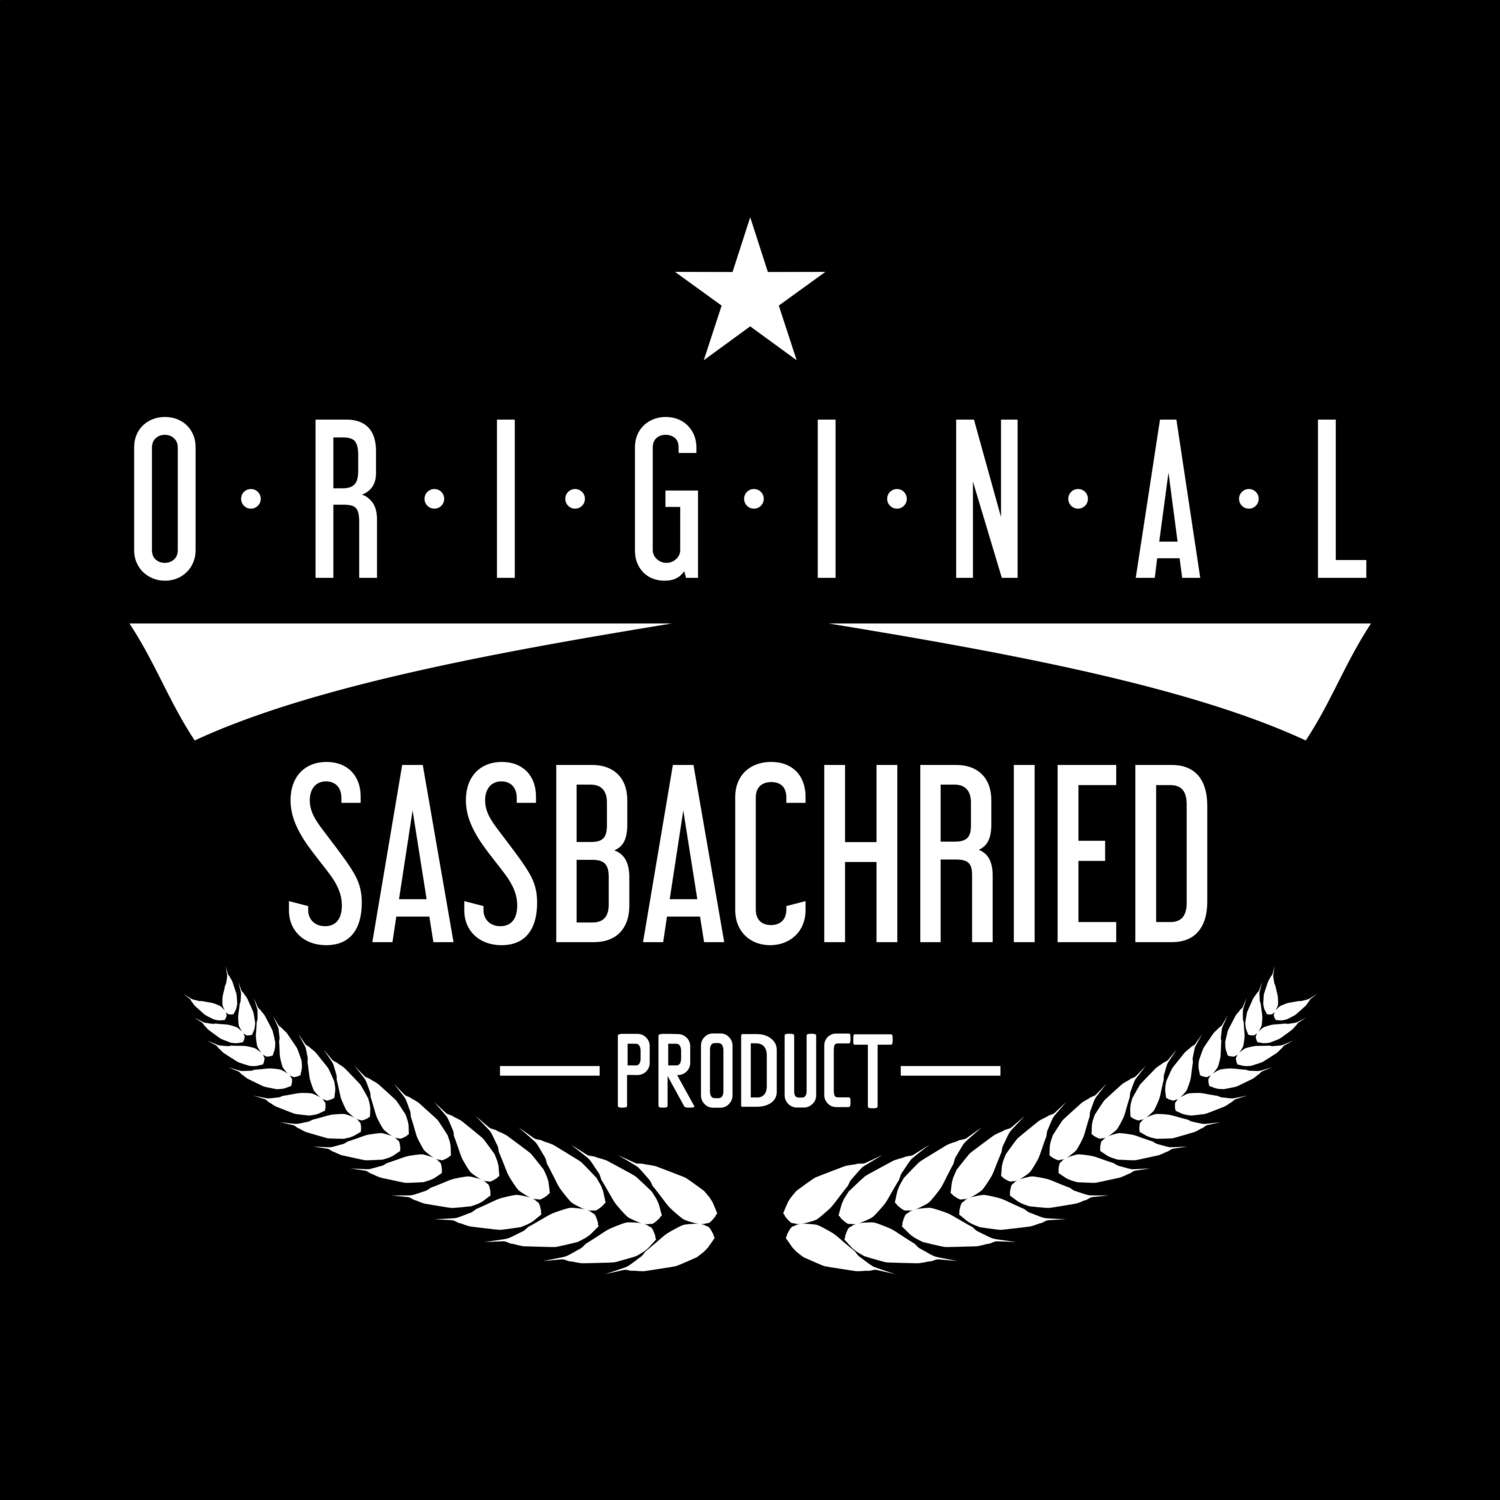 Sasbachried T-Shirt »Original Product«